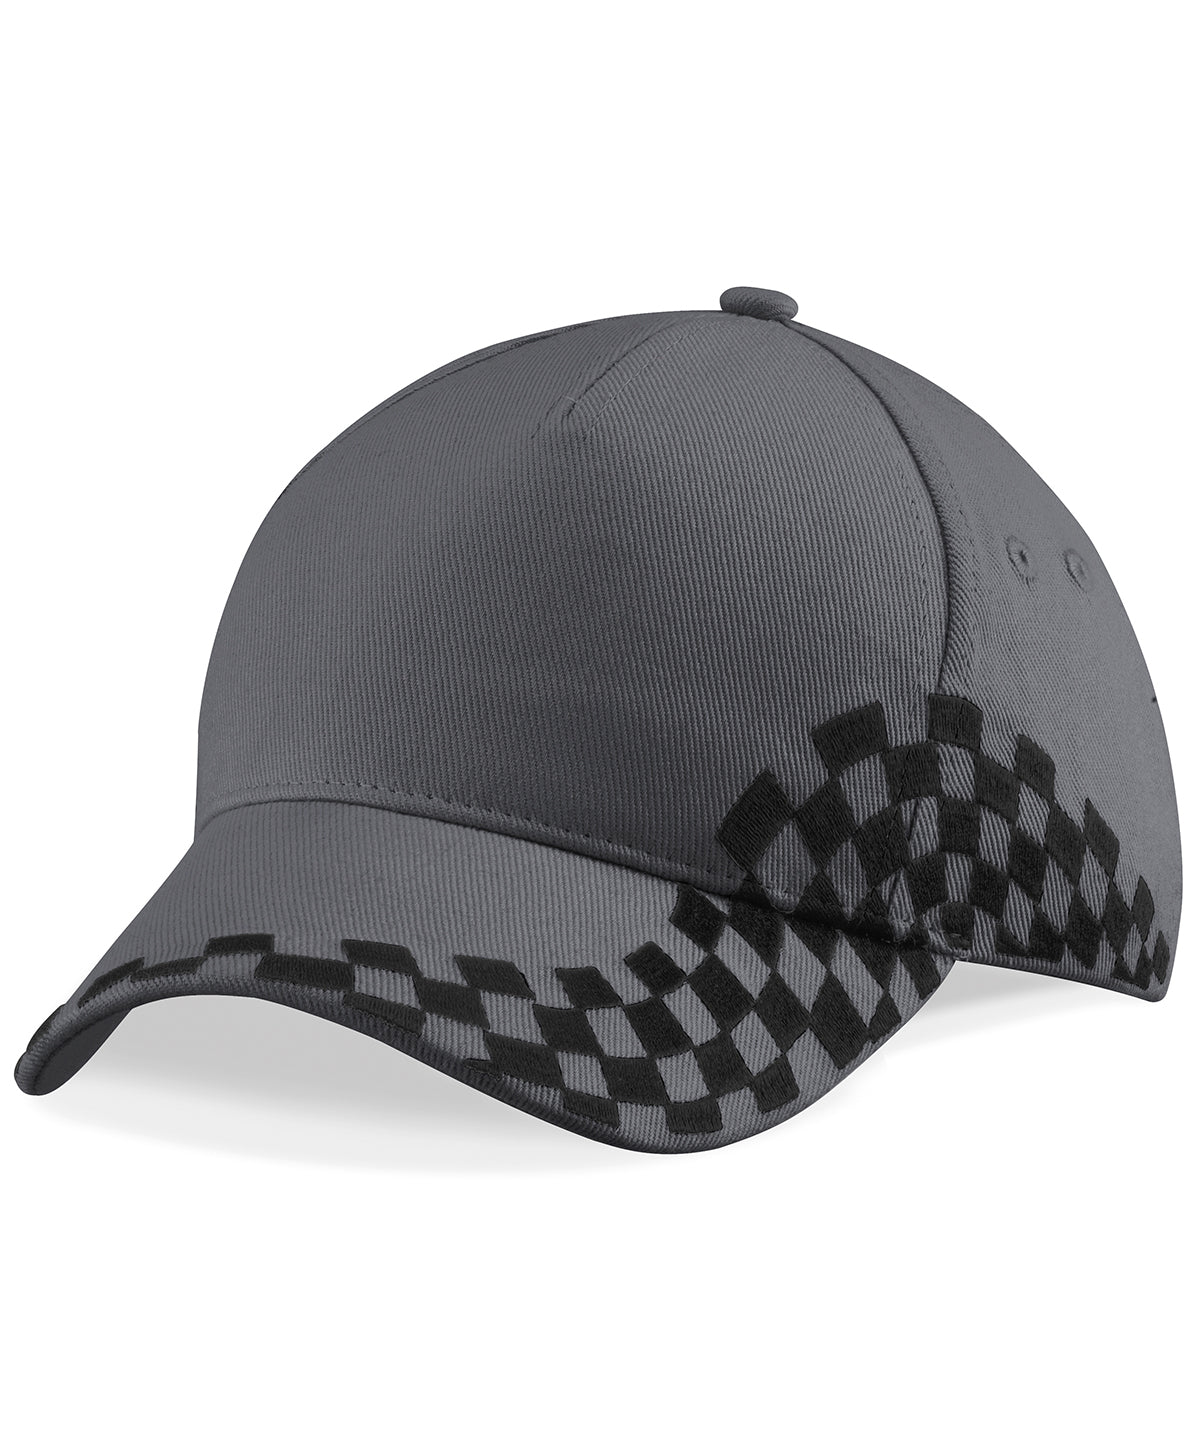 Personalised Caps - Dark Grey Beechfield Grand Prix cap